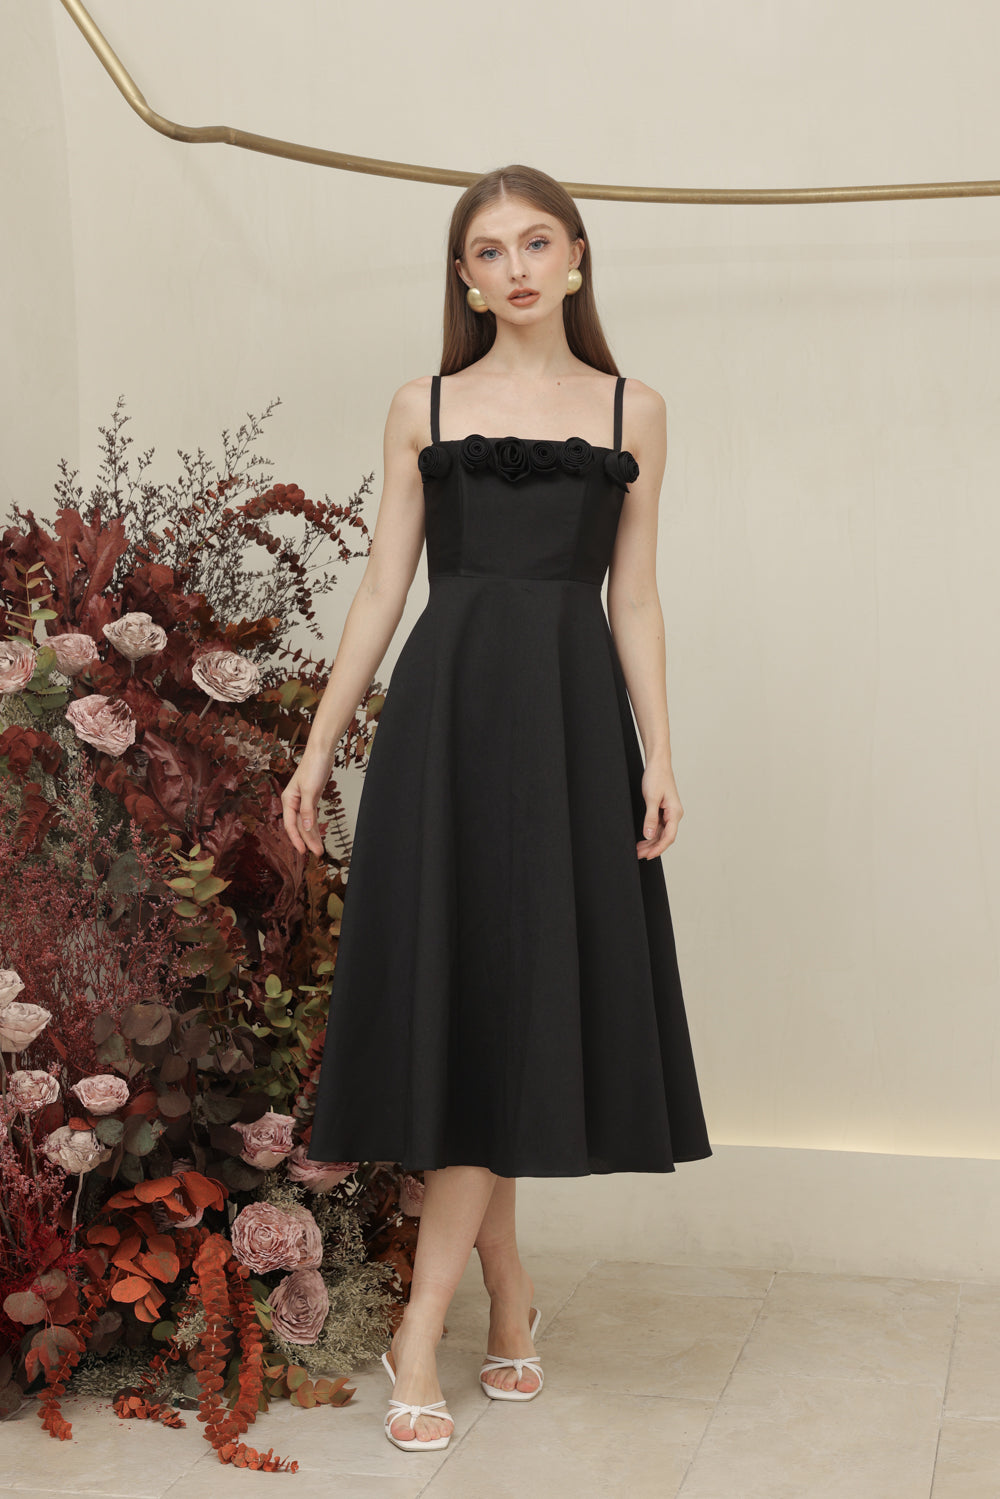 MORGANA DRESS Straight Neckline Strappy Midi Dress with Floral Details (Black Gazaar)